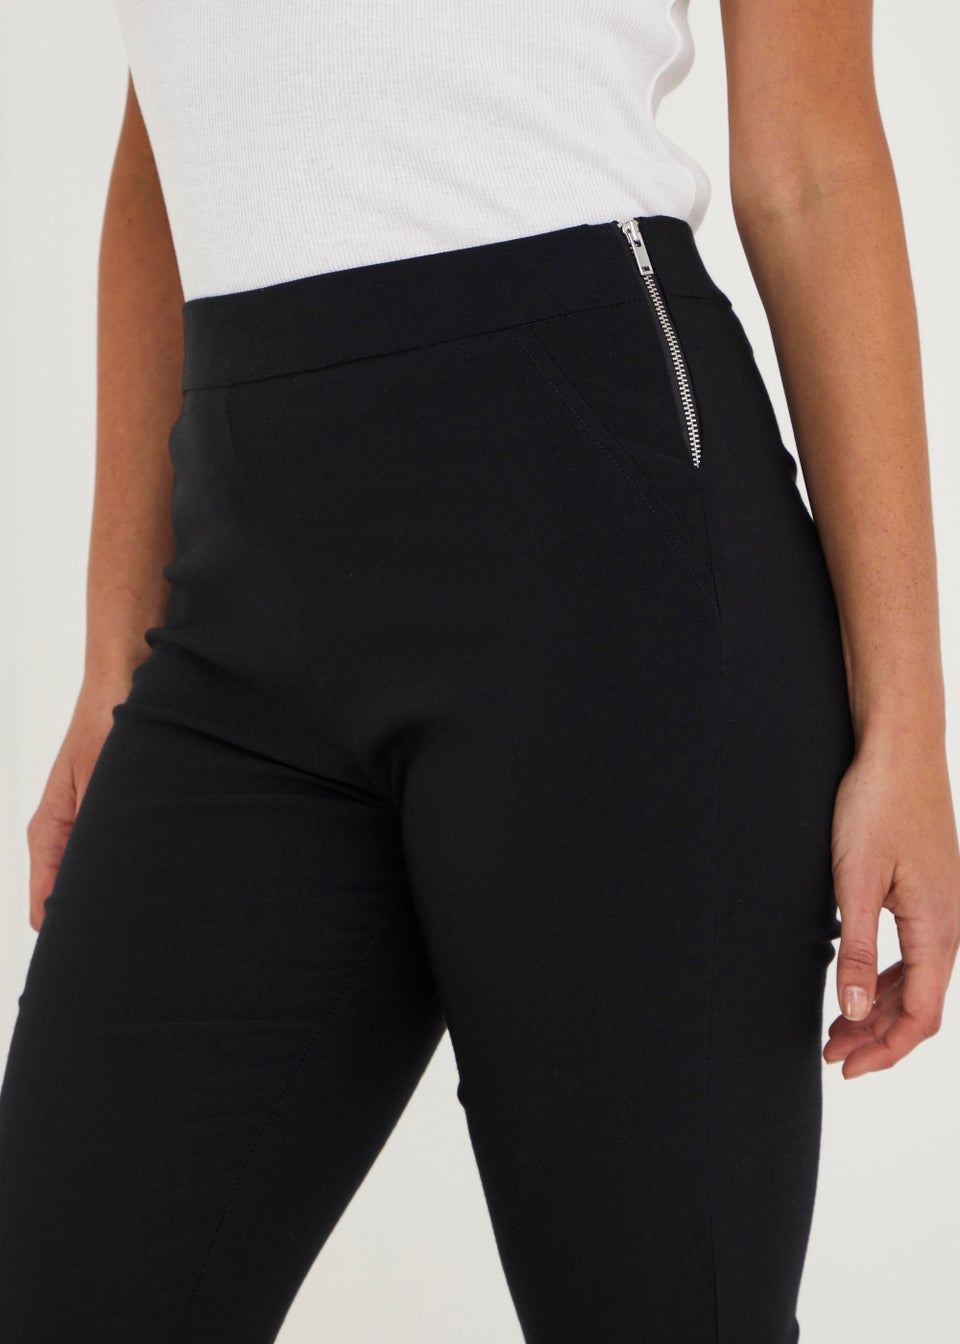 Worth Pants Womens 6 Black Dress Casual Side Zip Flat Front Trousers | eBay